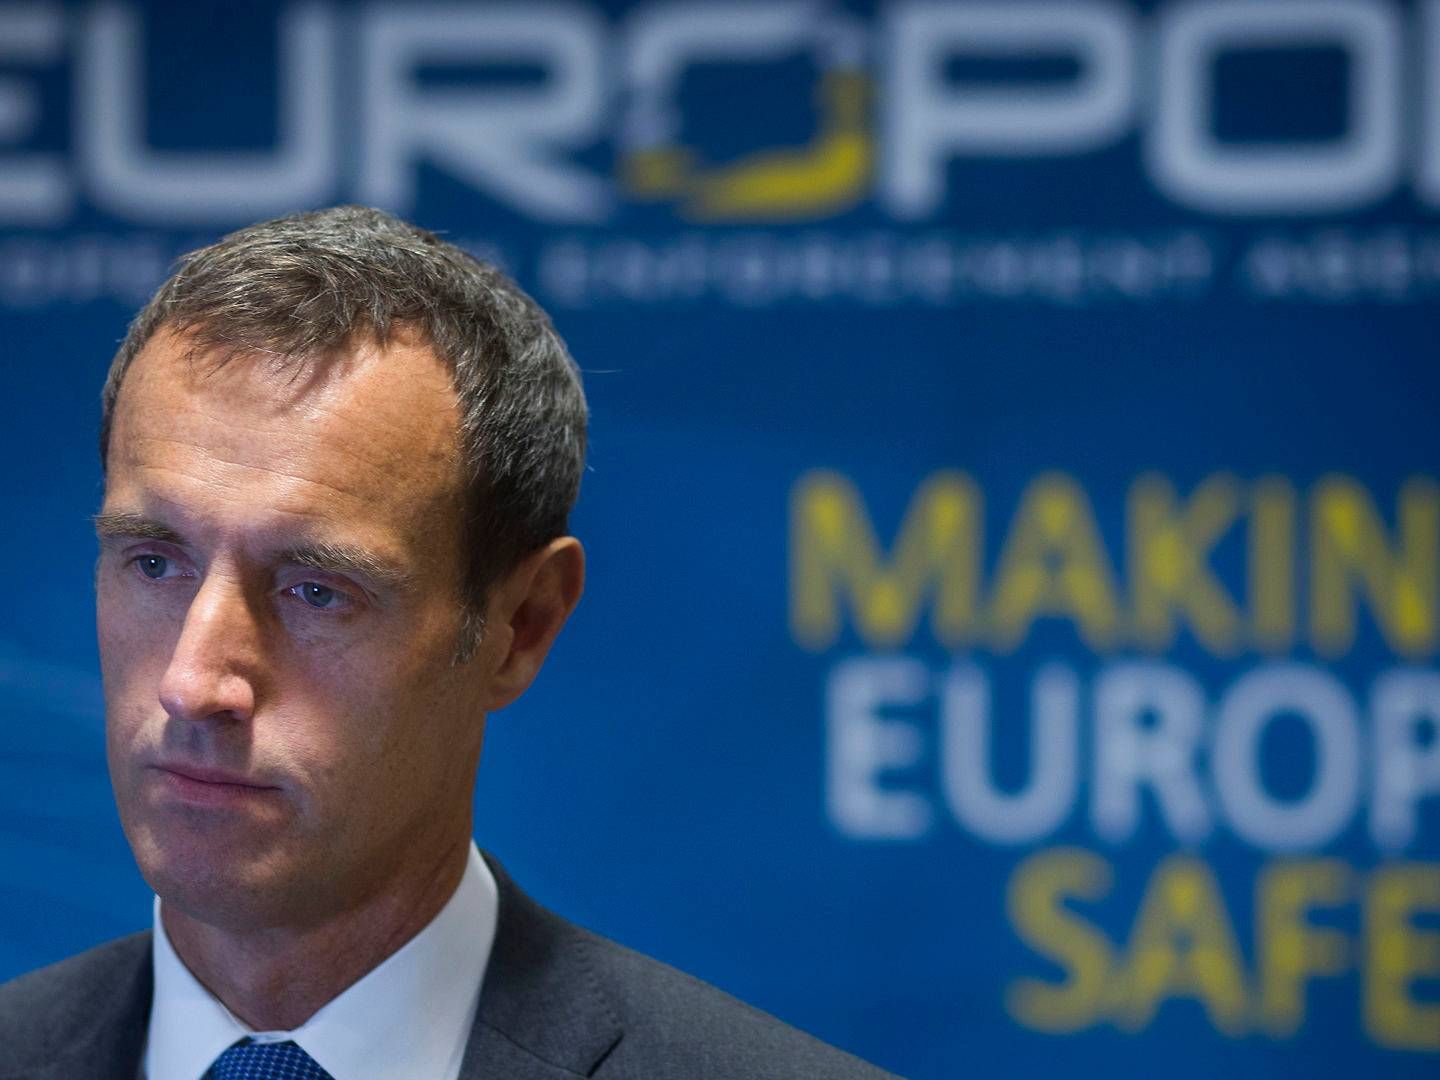 Rob Wainwright er tidligere chef for Europol. | Foto: Peter Dejong/AP/Ritzau Scanpix